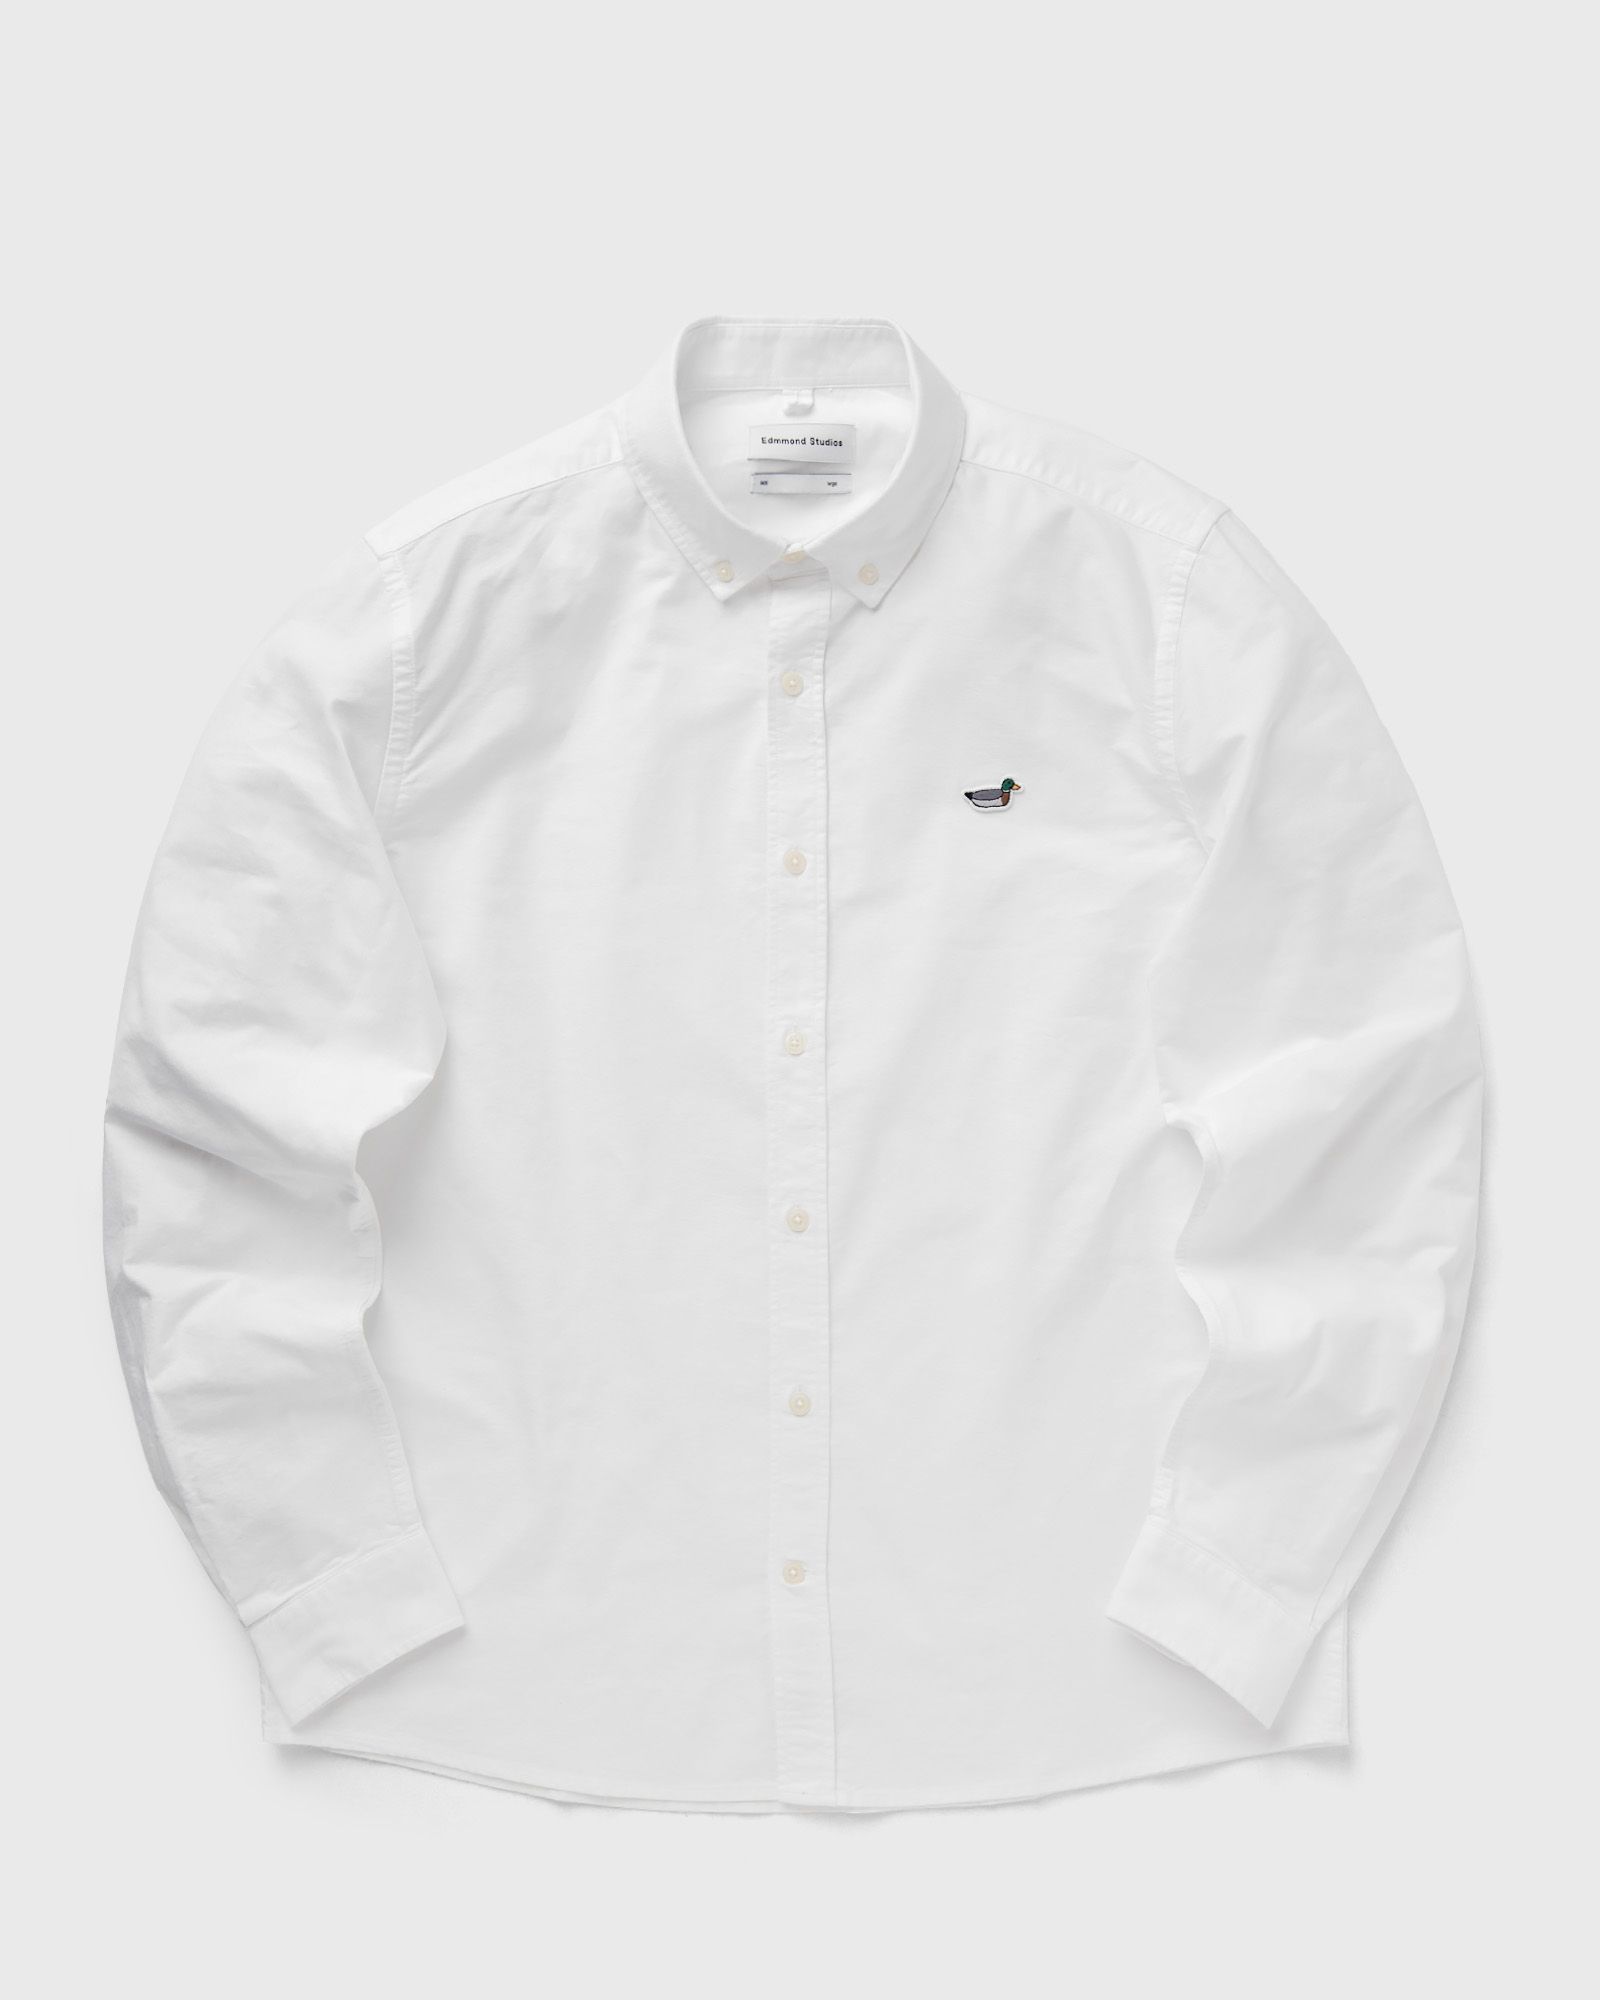 Edmmond Studios - bd shirt duck edition men longsleeves white in größe:l